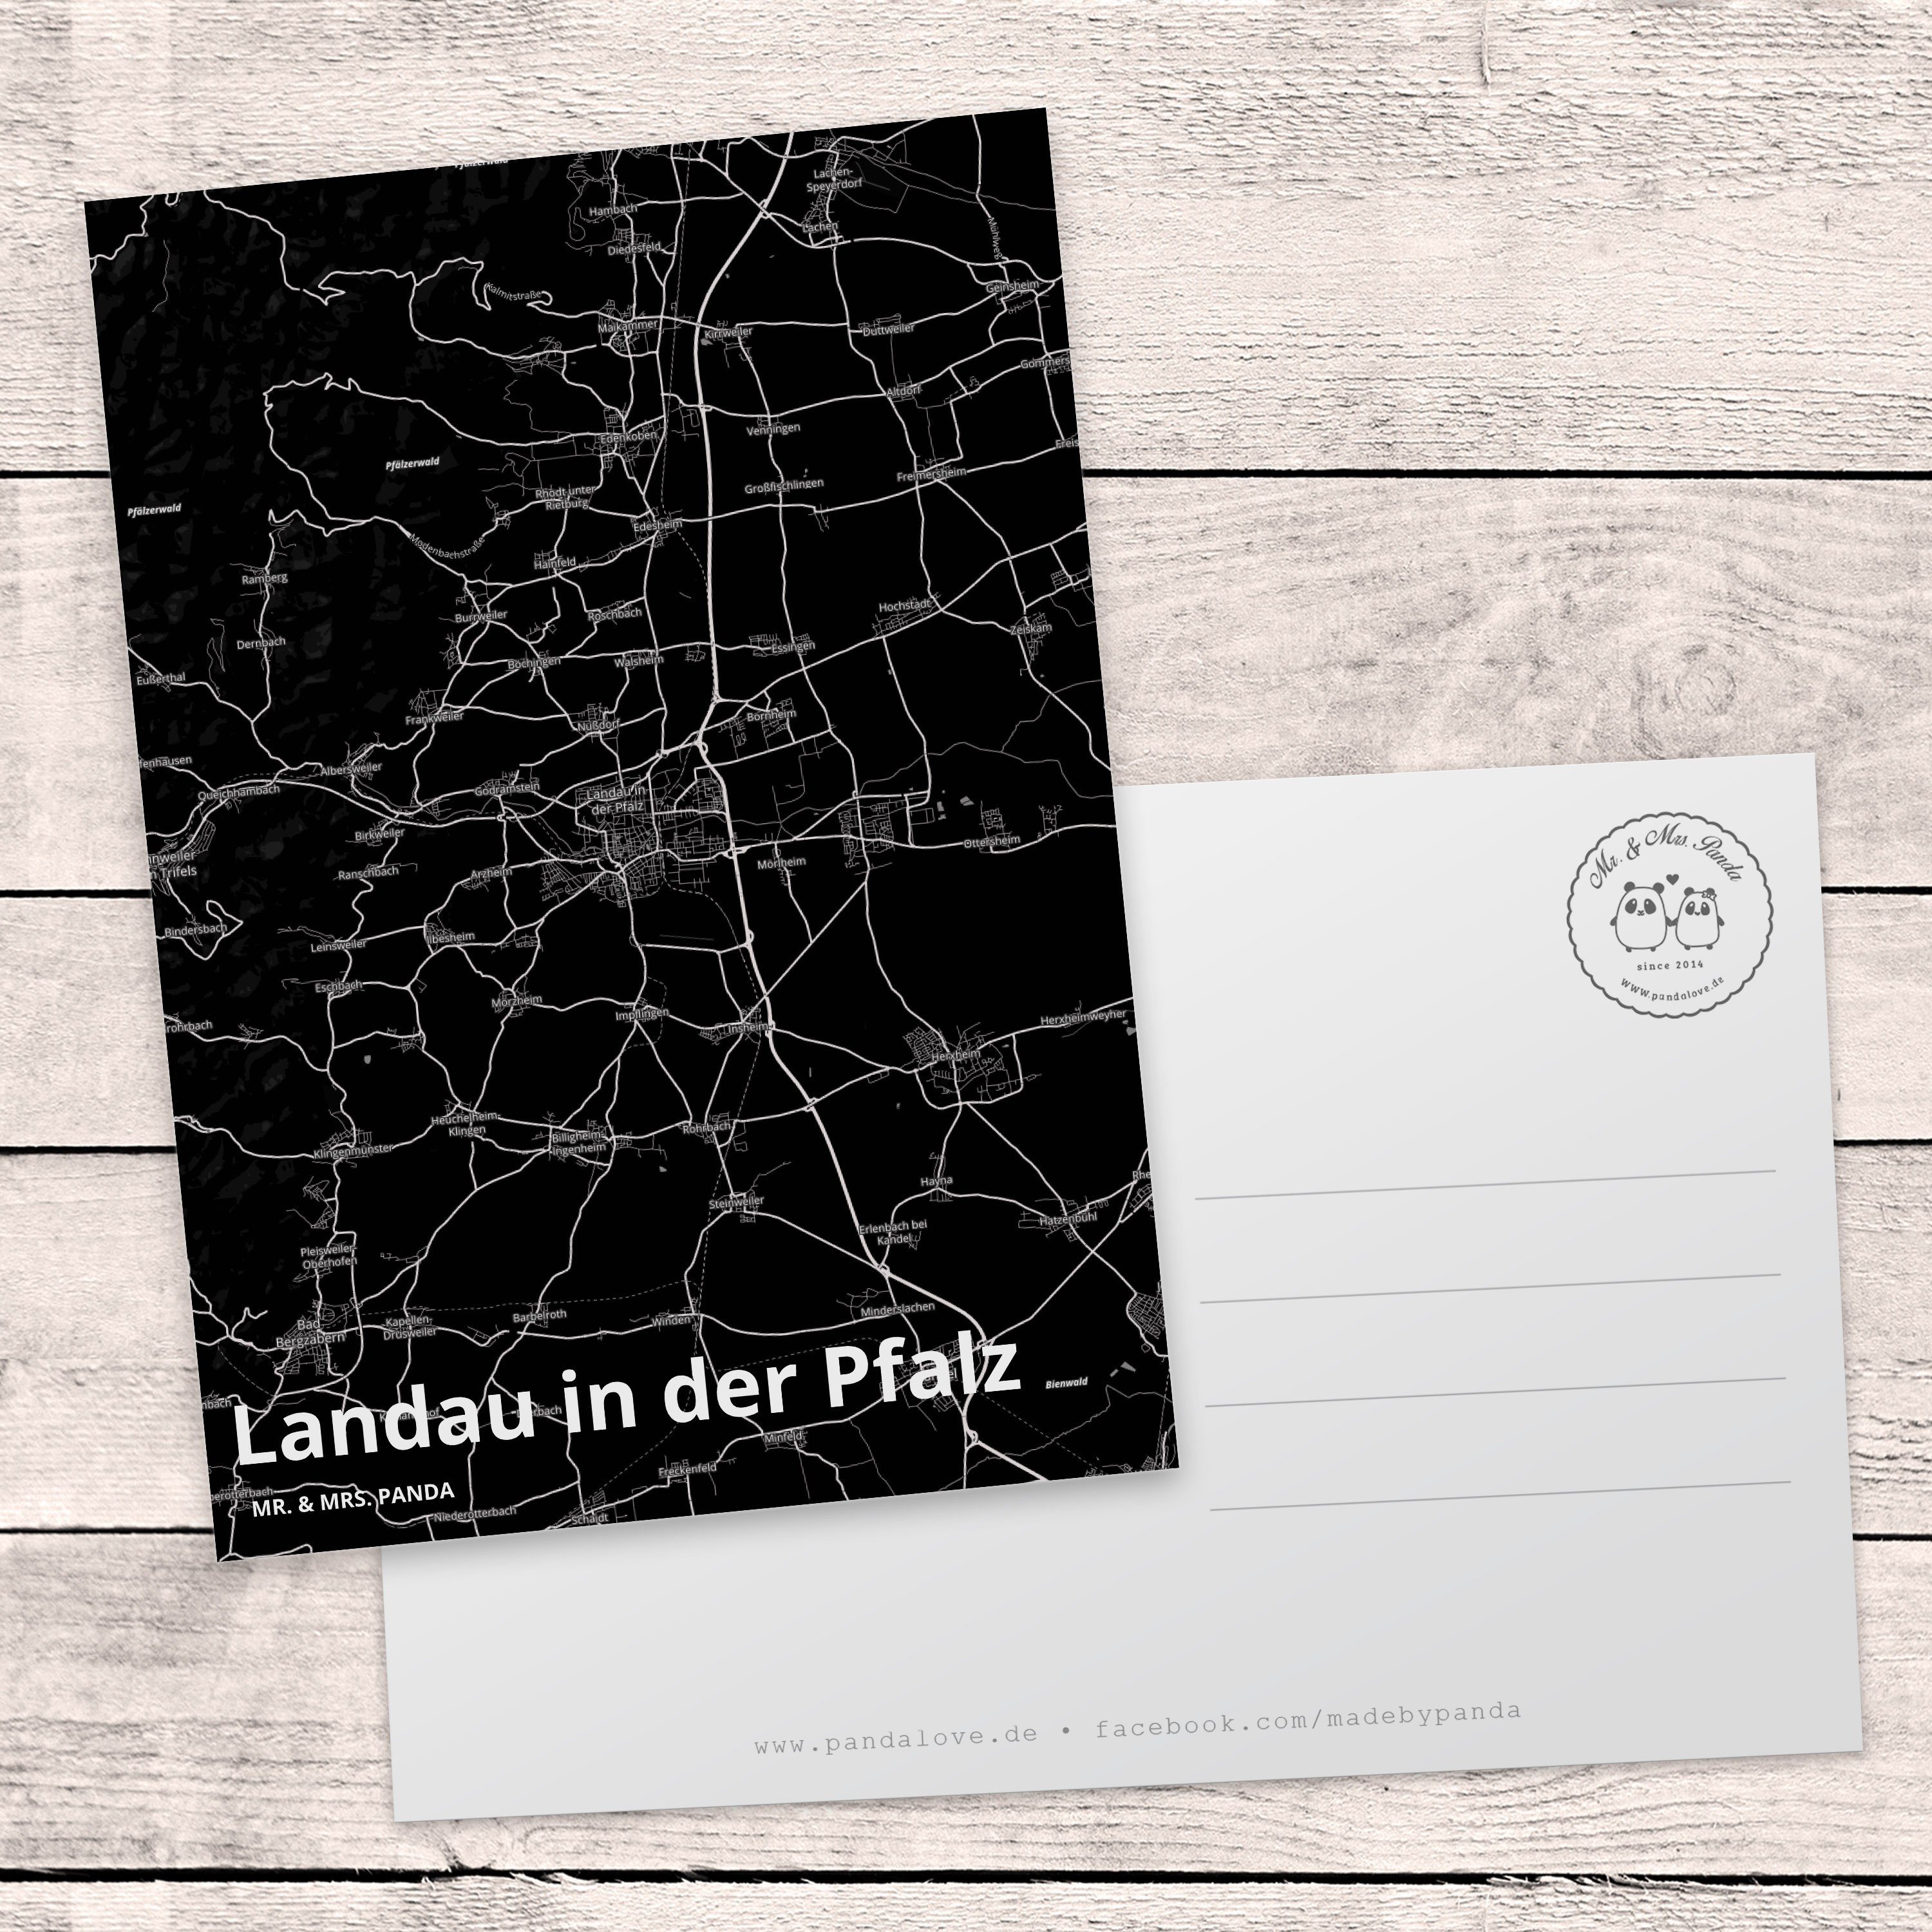 Panda Landau Mr. Postkarte Stadtp Stadt Mrs. Dorf Karte in der Landkarte - Map & Geschenk, Pfalz